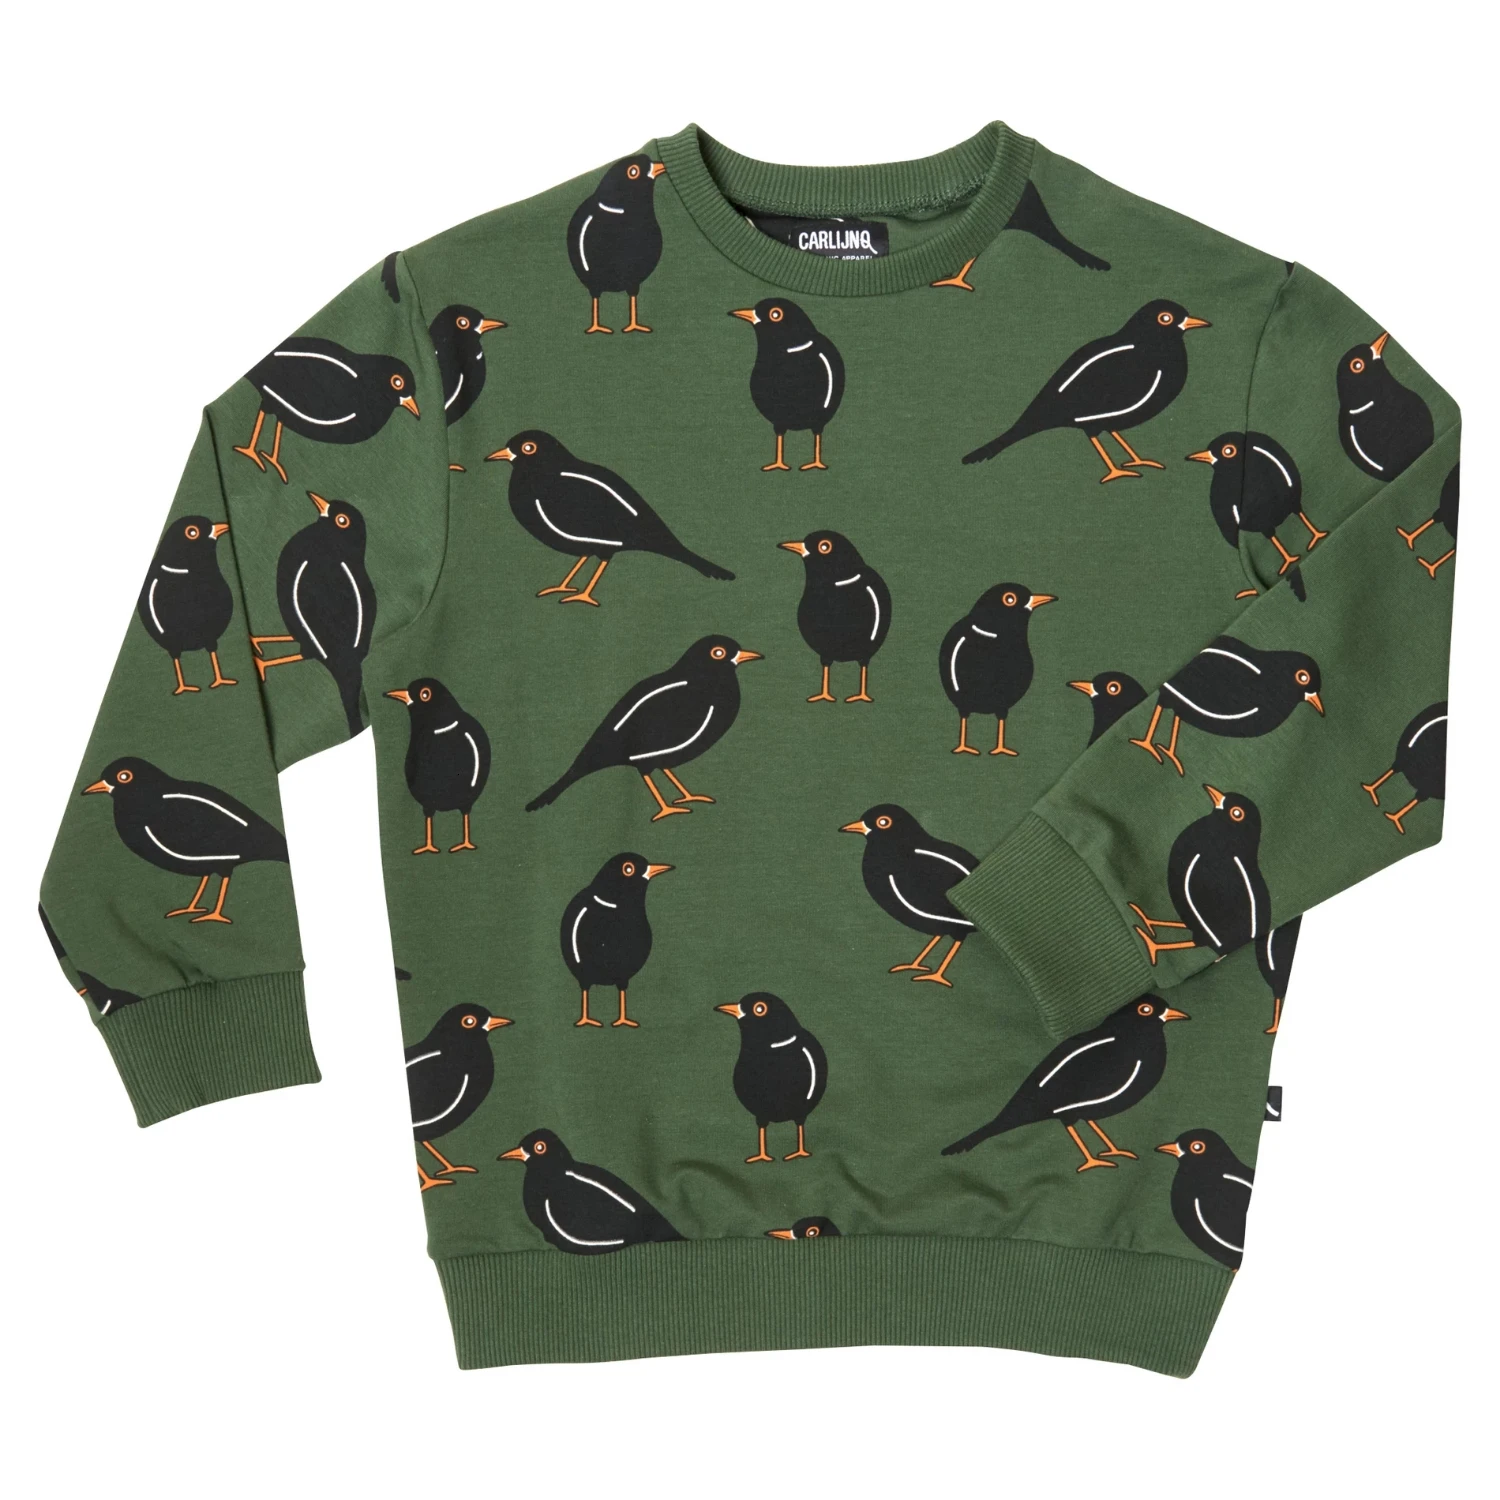  Kids Sweaters 2019 CarlijnQ Brand New Autumn Winter Boys Girls Bird Print Sweatshirts Baby Child Fa